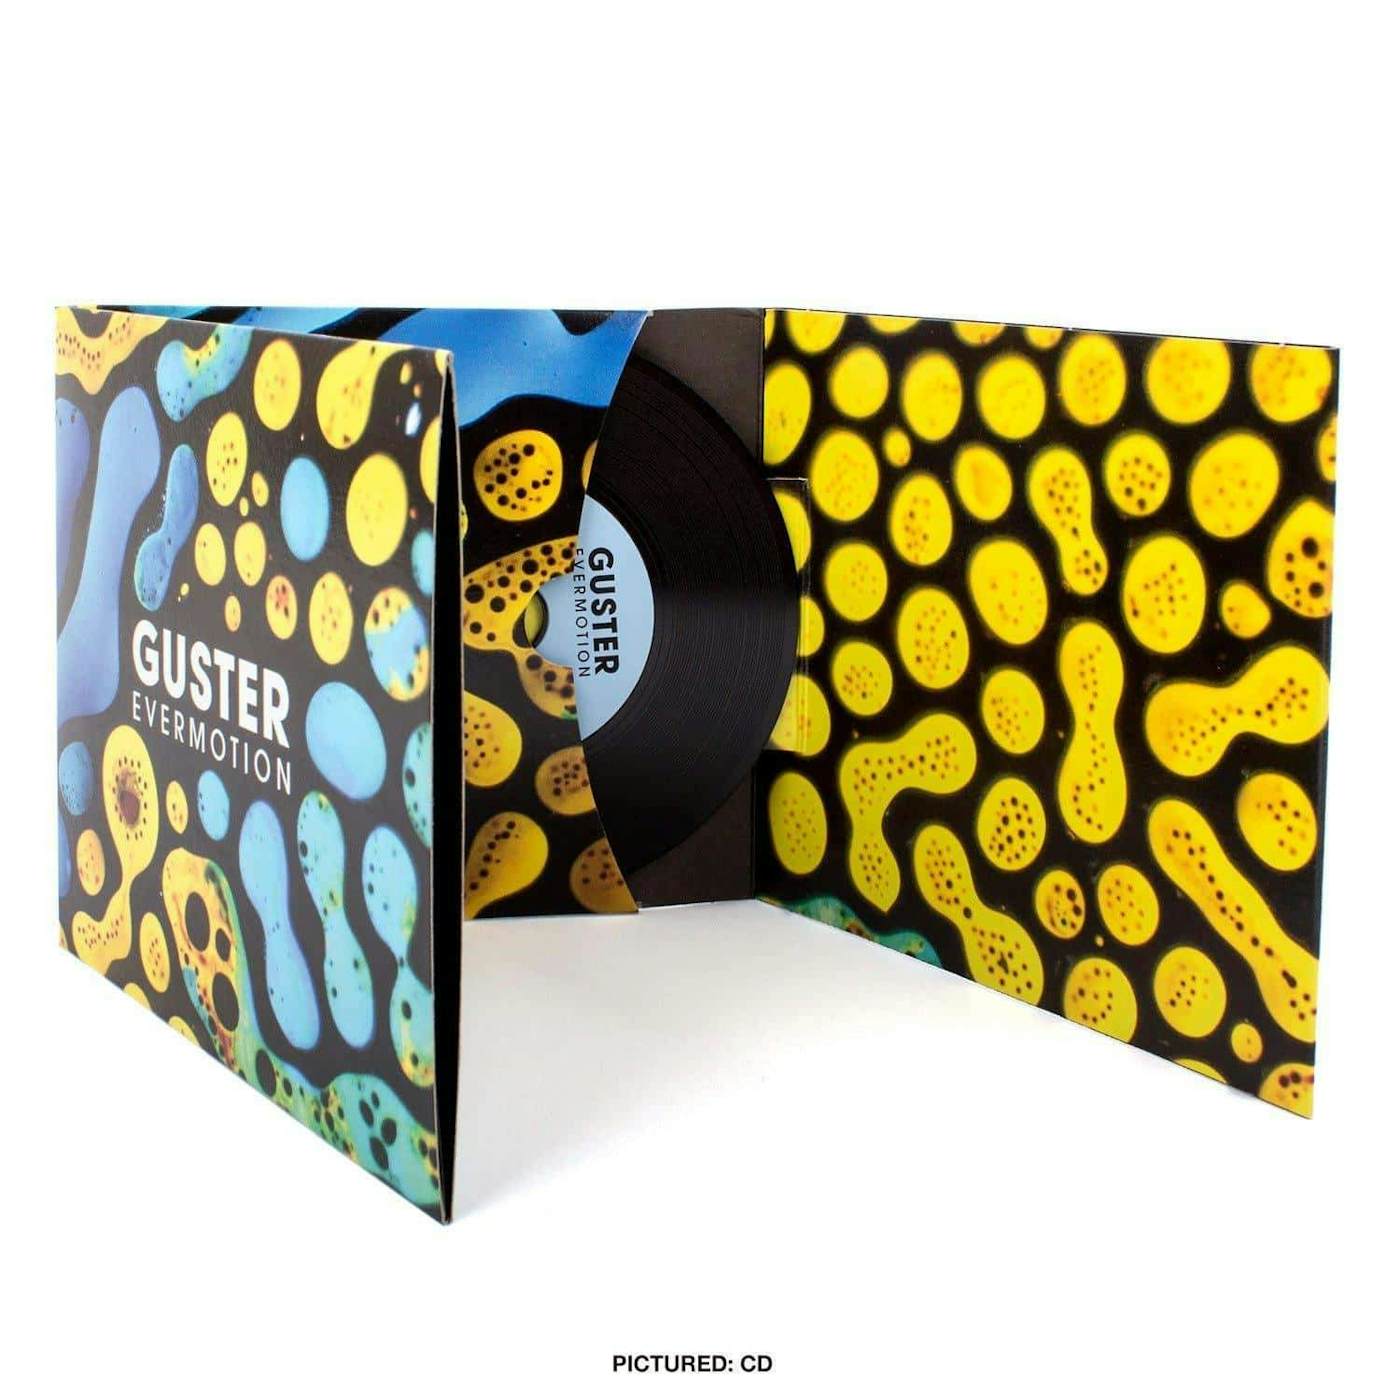 Guster 'Evermotion' CD / Vinyl LP